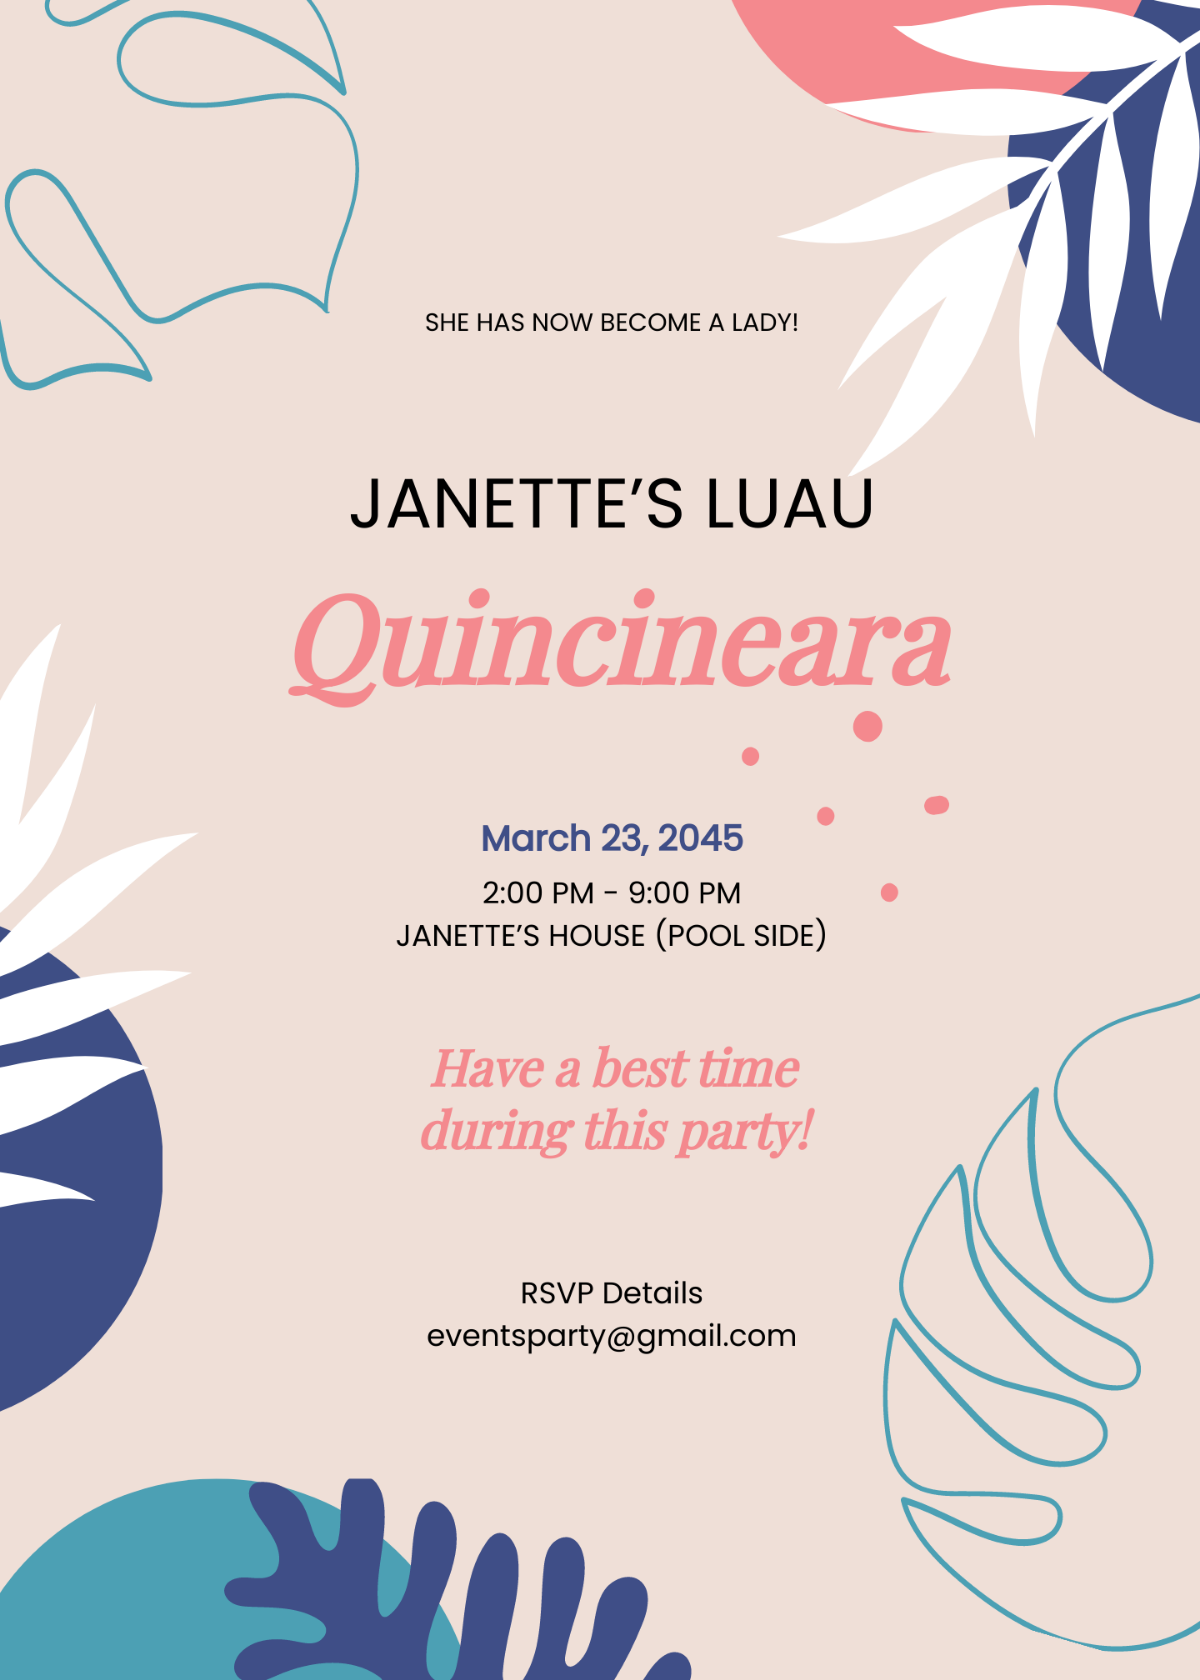 Luau Quincineara Fifteenth Party Invitation Template